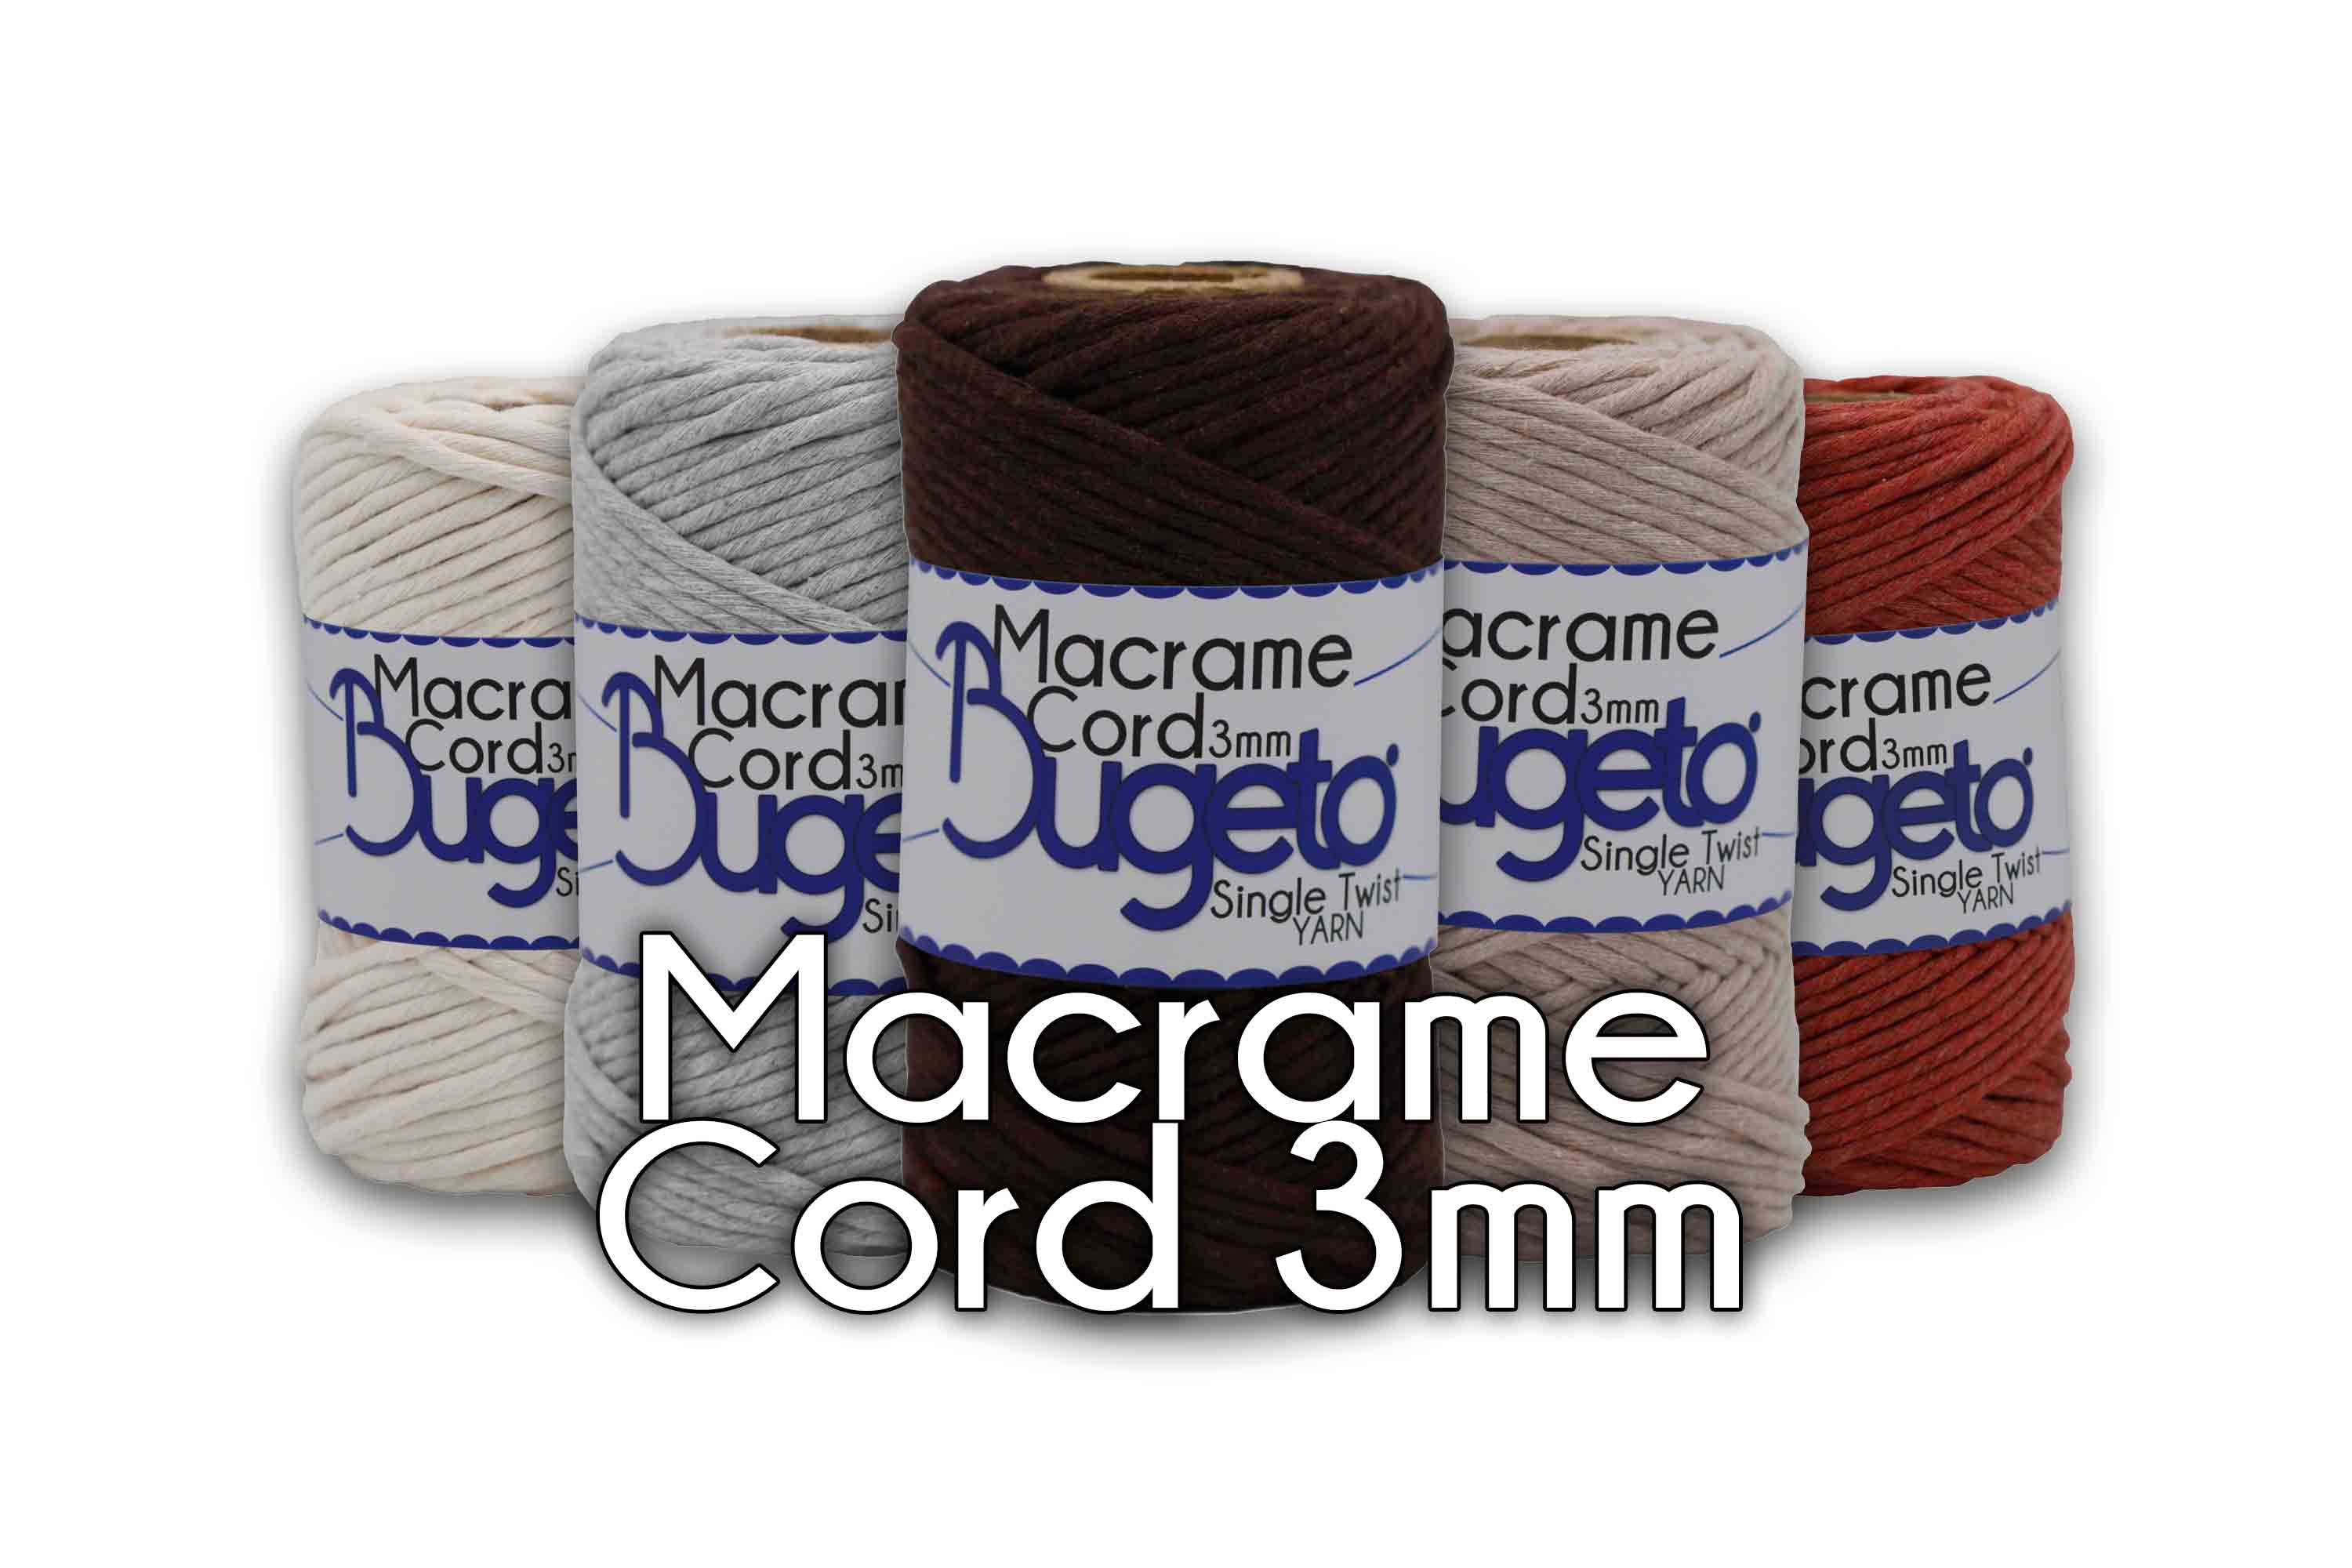 wall type macrame yarns macrame cord yarns bugeto yarn